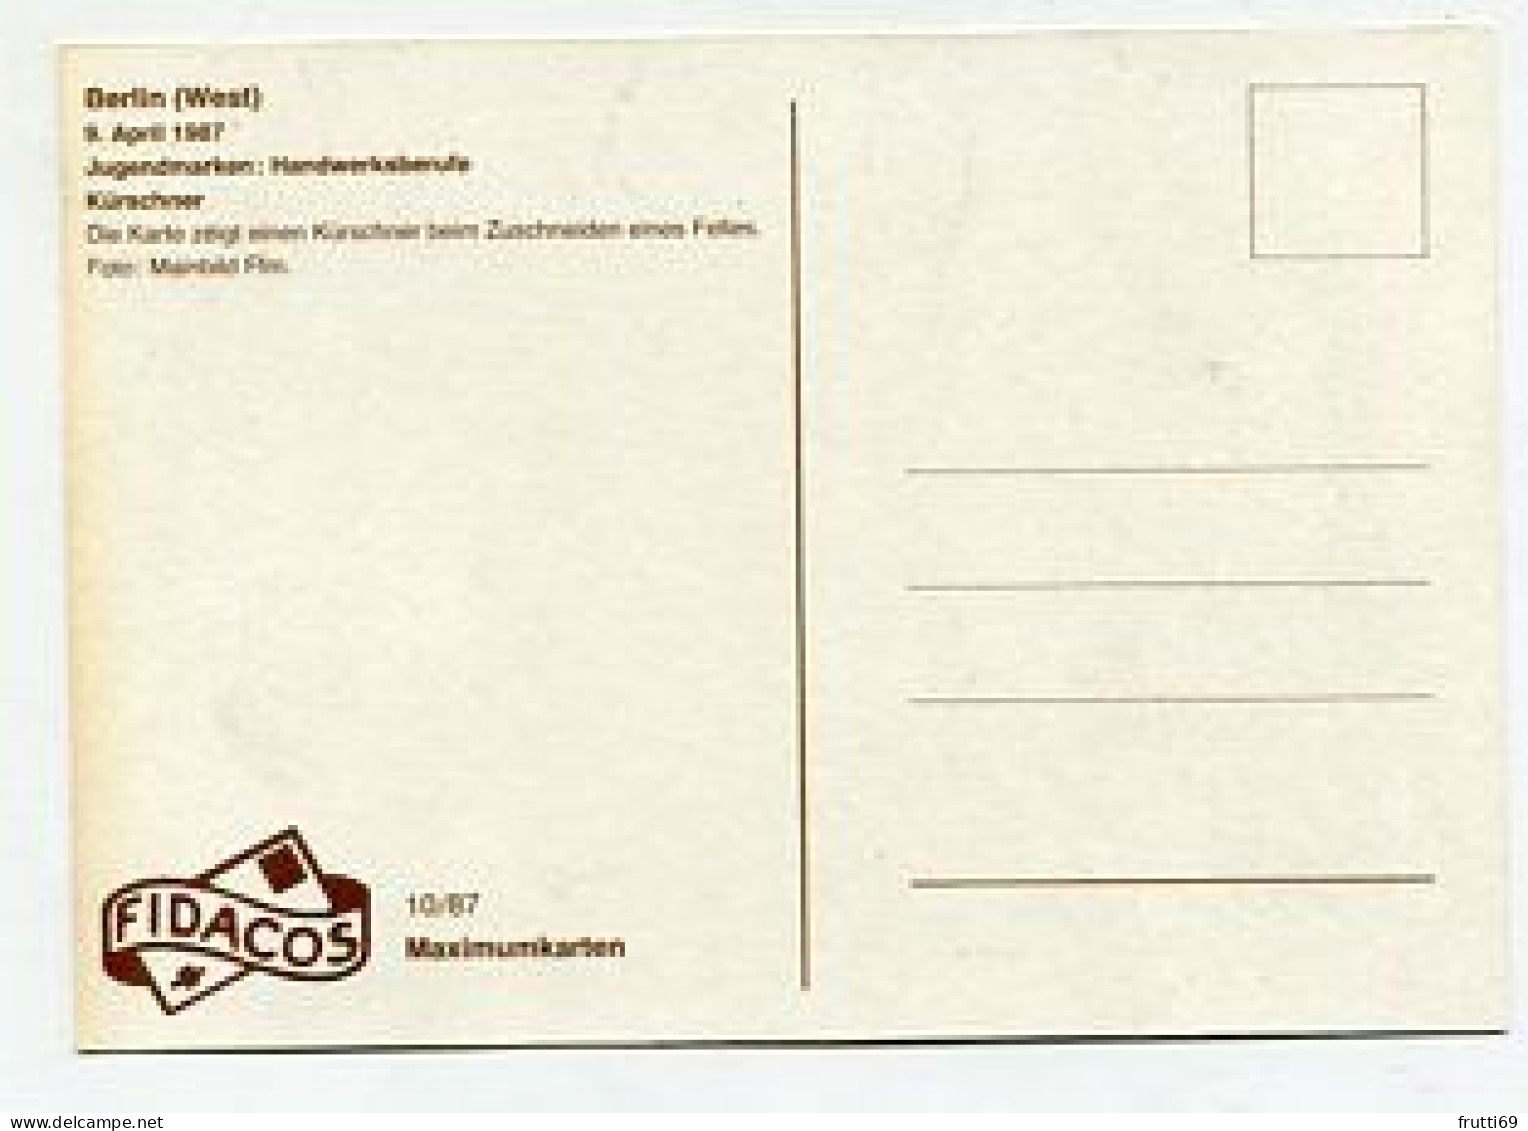 MC 158413 GERMANY BERLIN WEST - 1987 - Jugendmarken - Kürschner - Maximumkarten (MC)